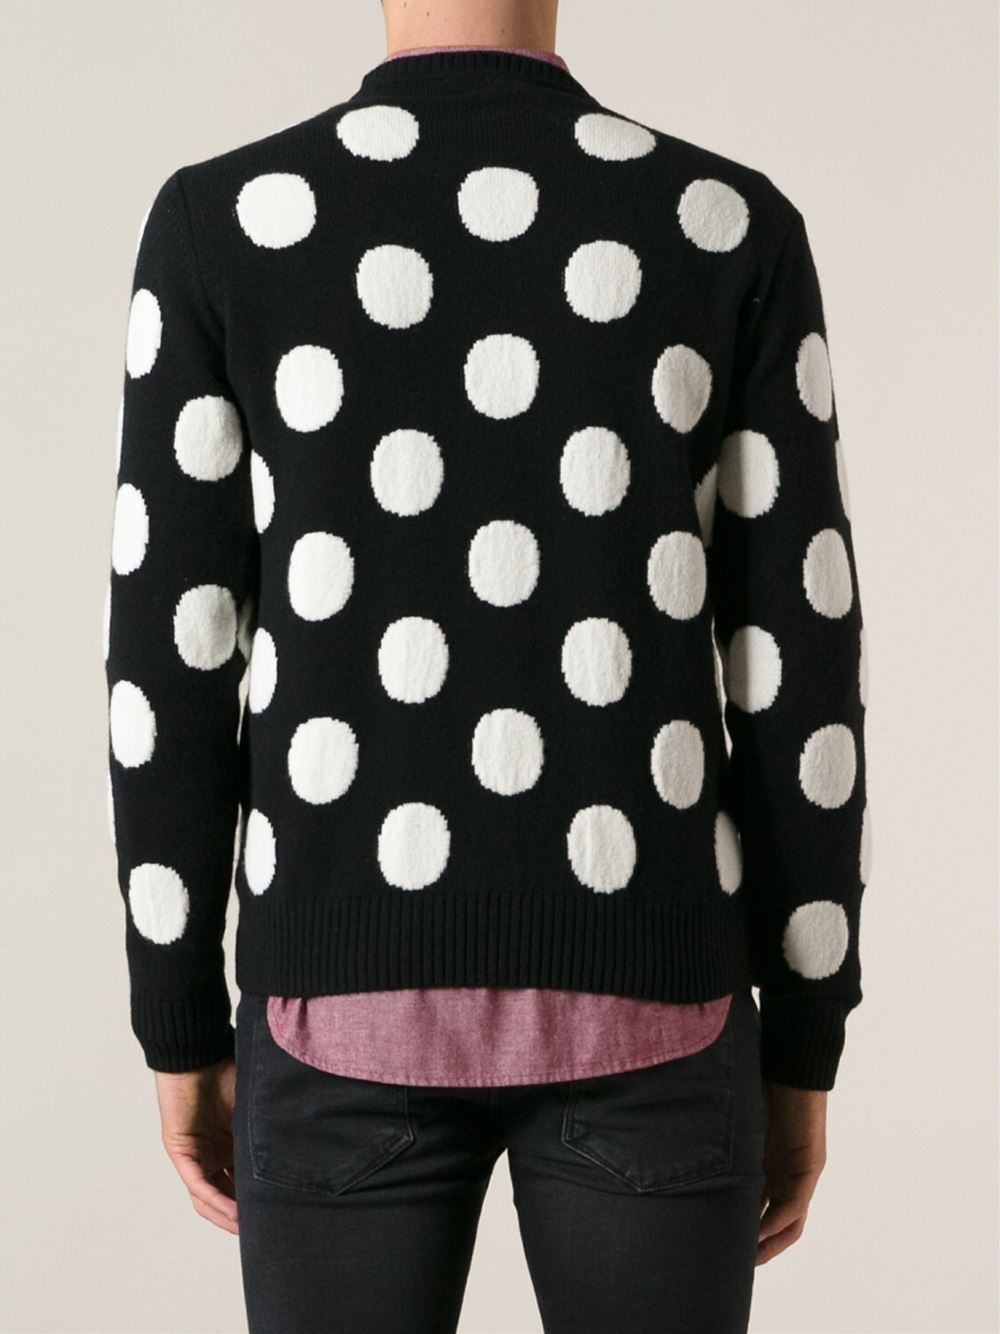 Lyst - AMI Polka Dot Sweater in Black for Men